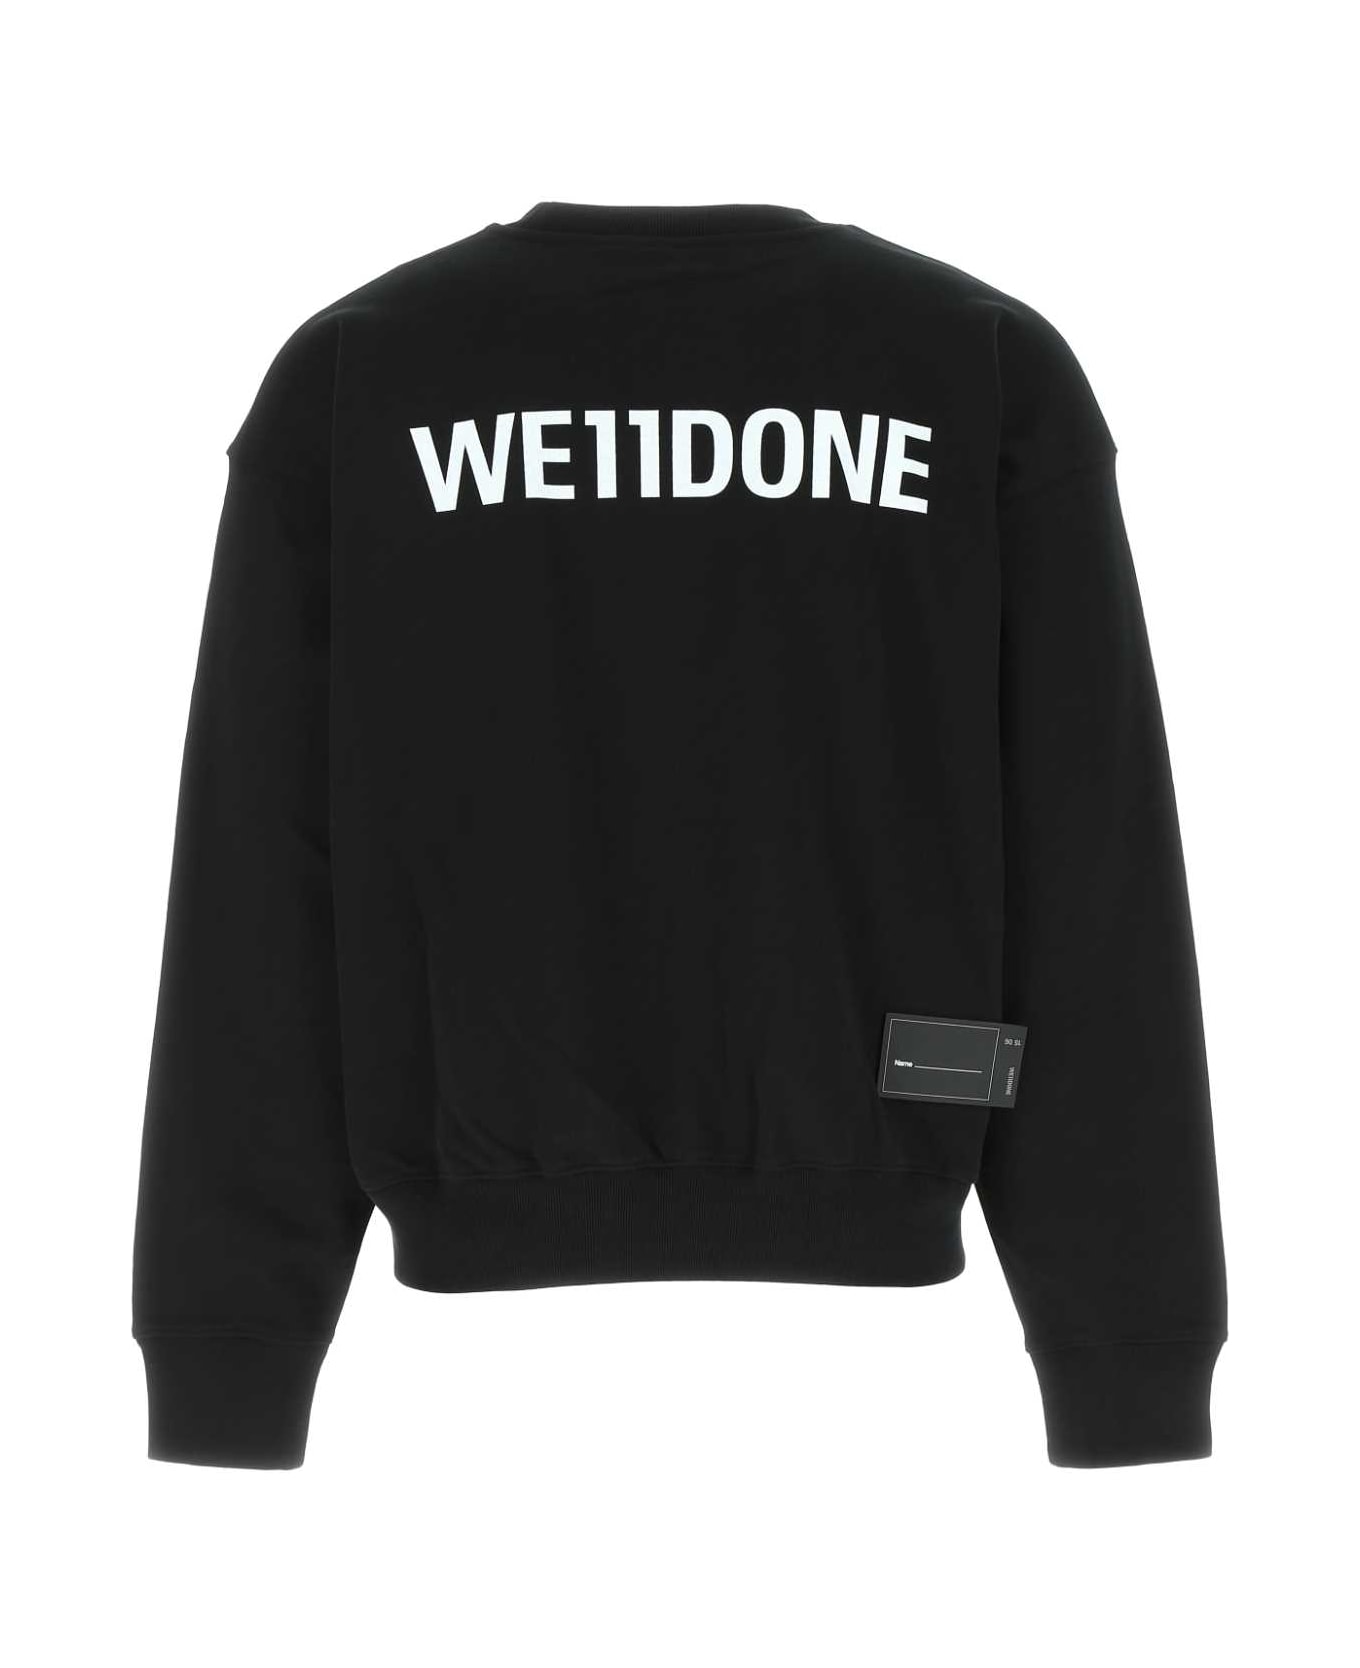 WE11 DONE Black Cotton Oversize Sweatshirt - BK